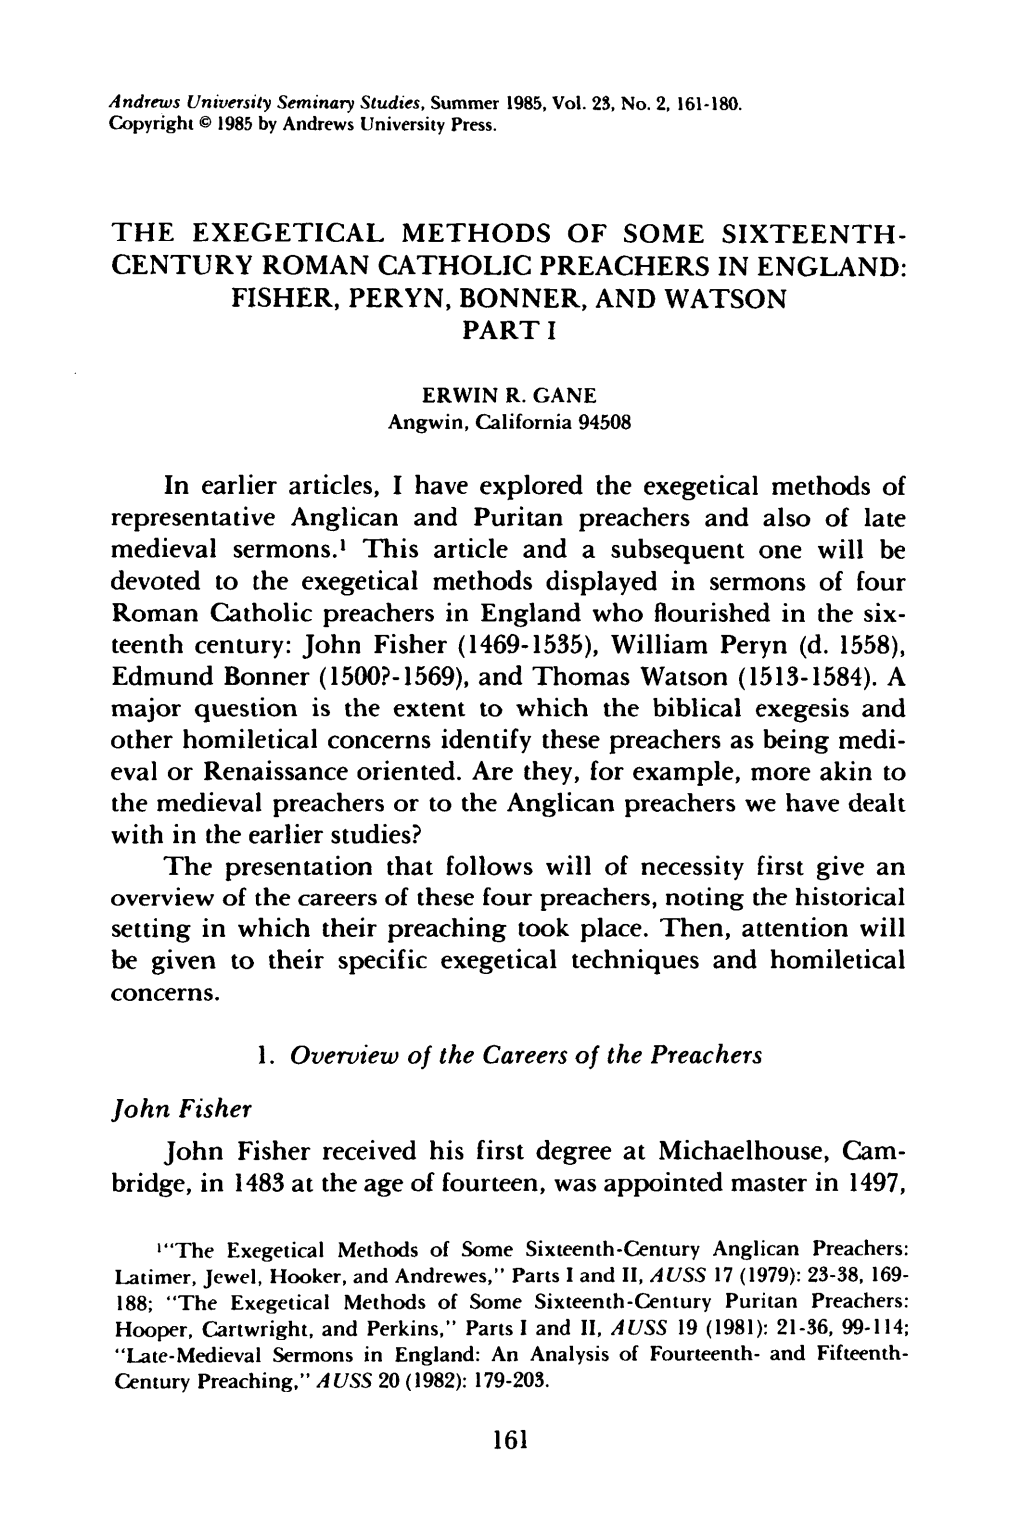 The Exegetical Methods of Some Sixteenth-Century Roman Catholic